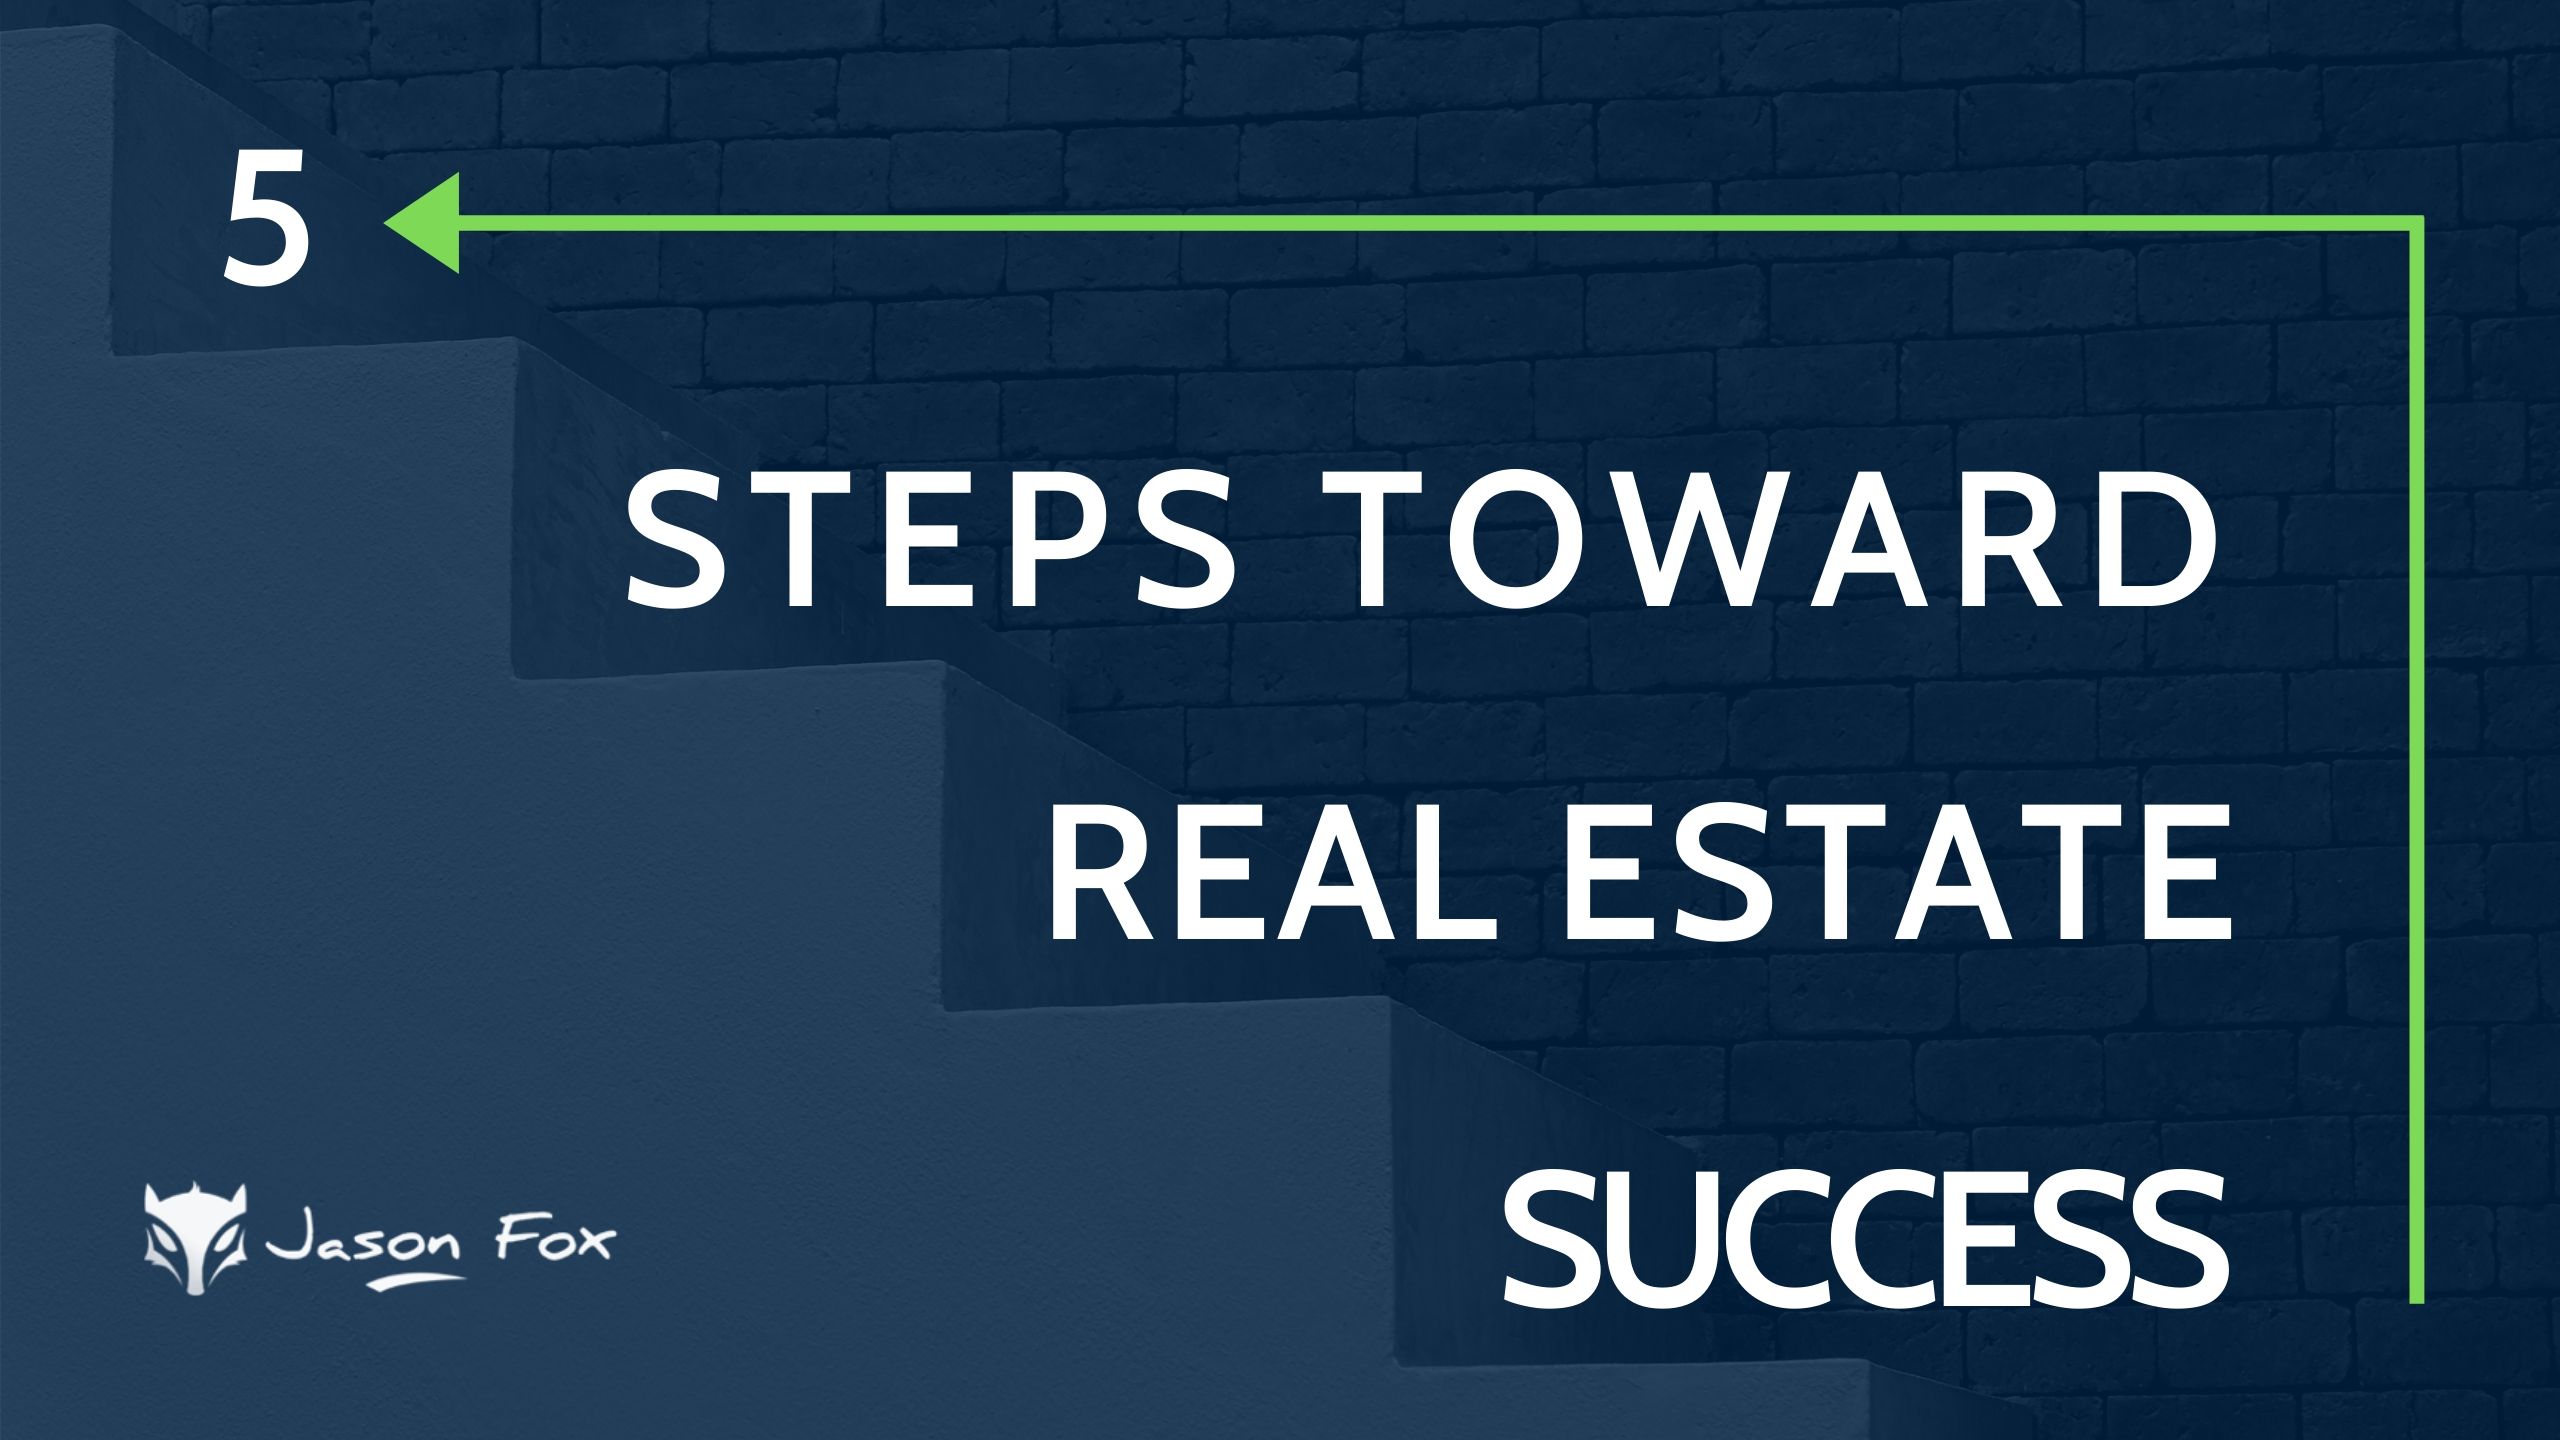 5 Steps toward real estate success